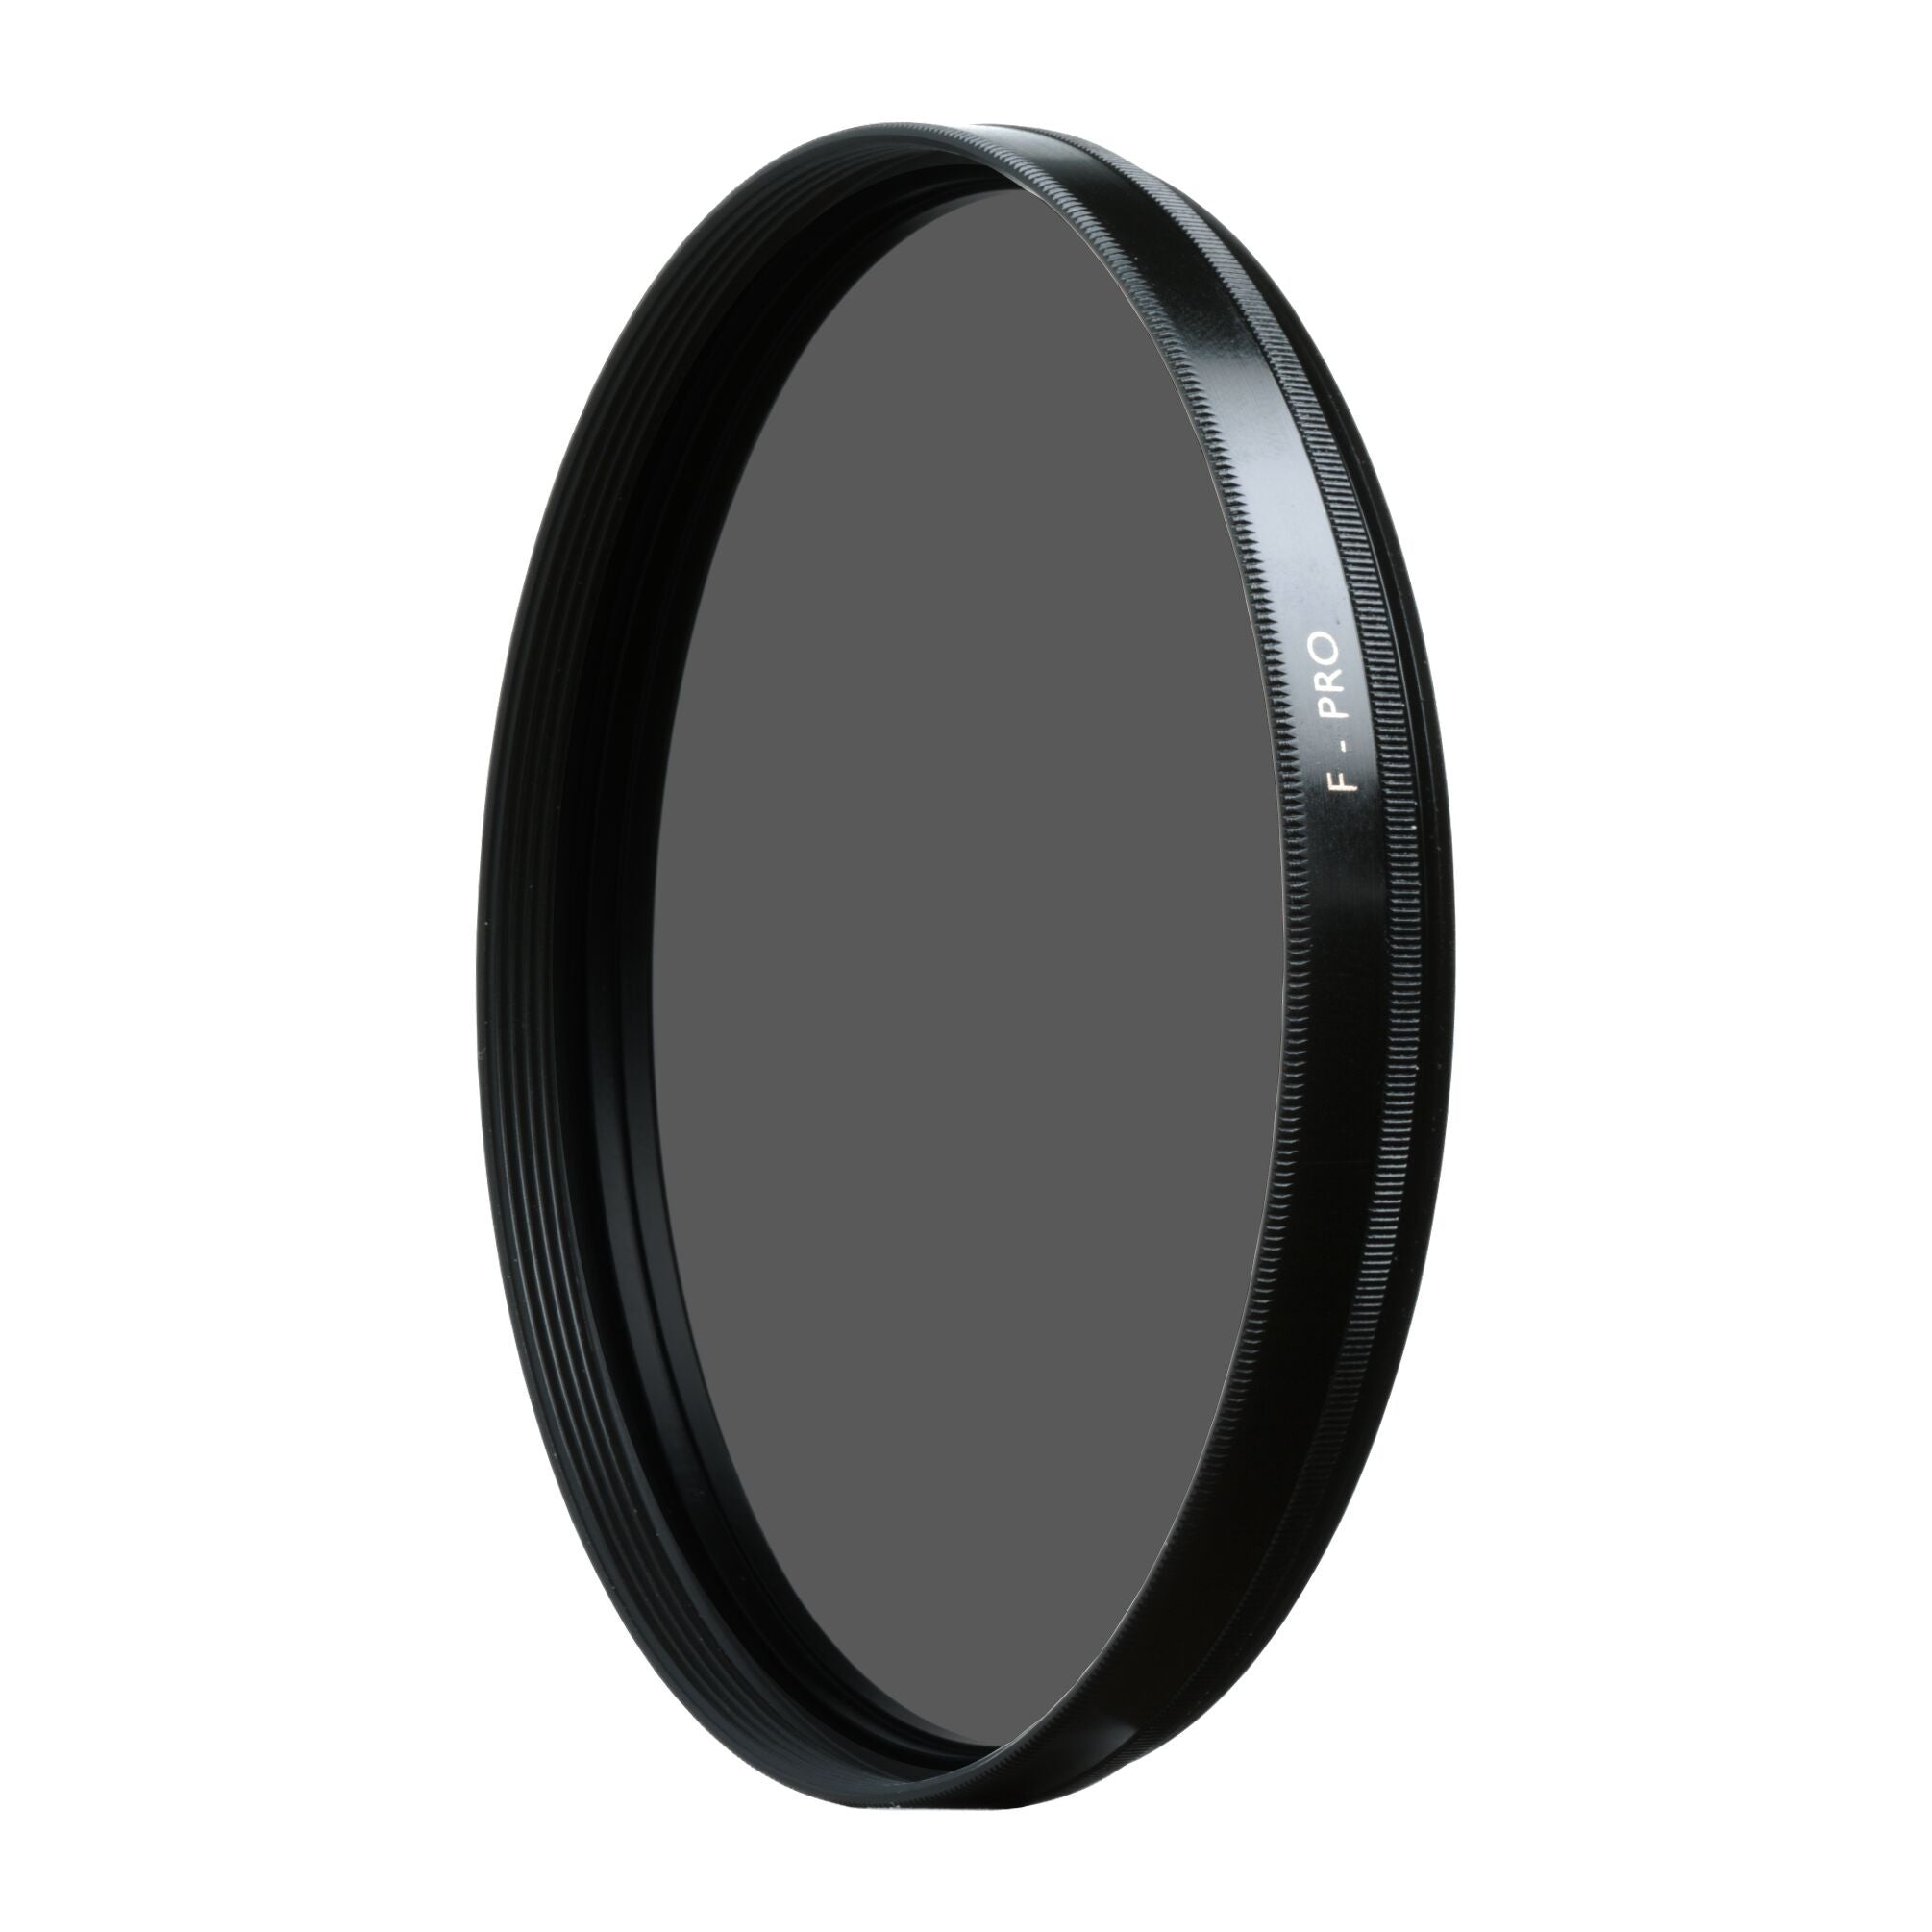 B+W 72mm Circular Polarizer Filter, lenses filters polarizer, B+W - Pictureline 